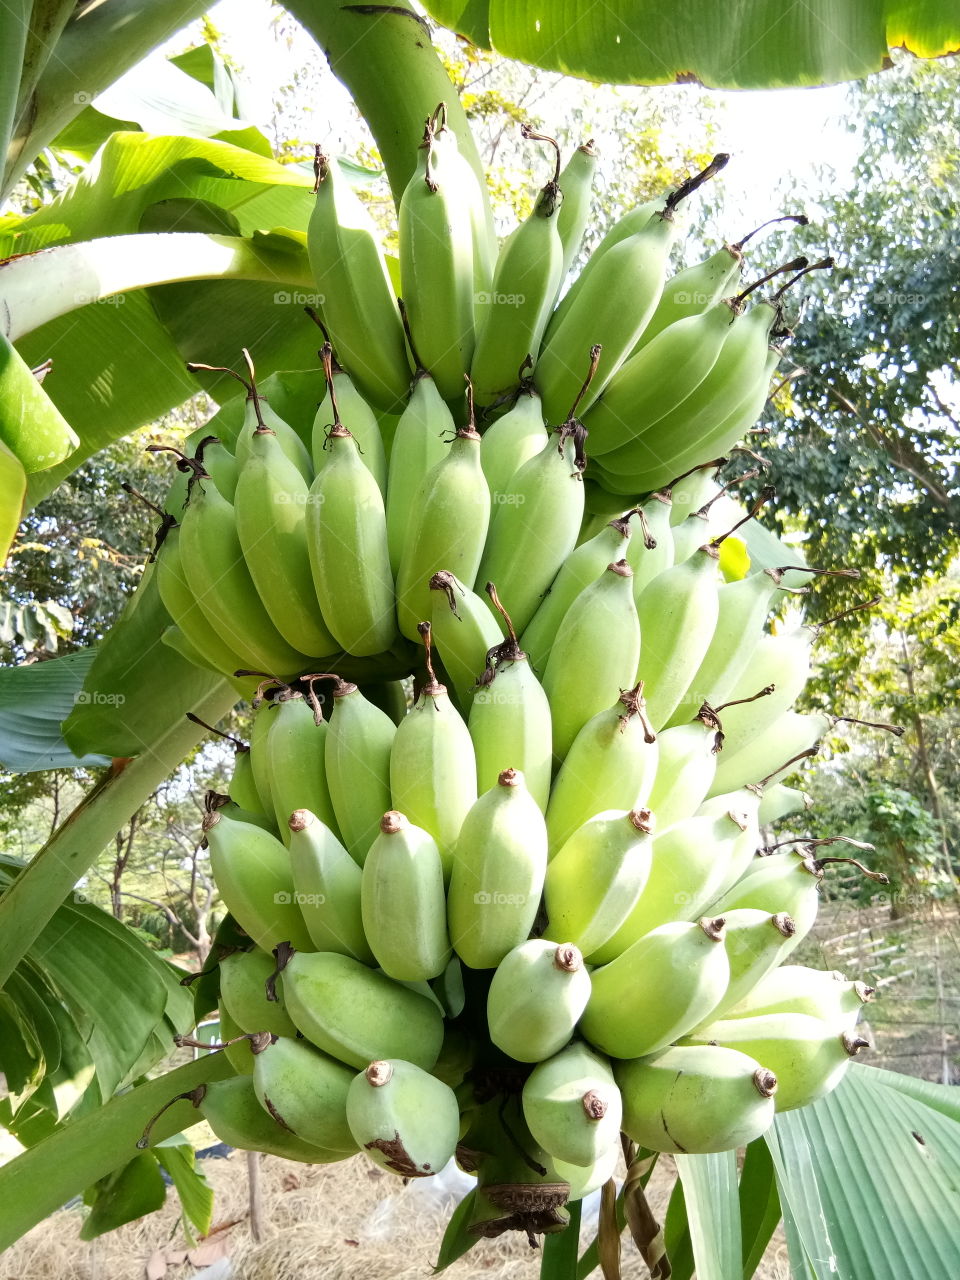 banana
green
thailand